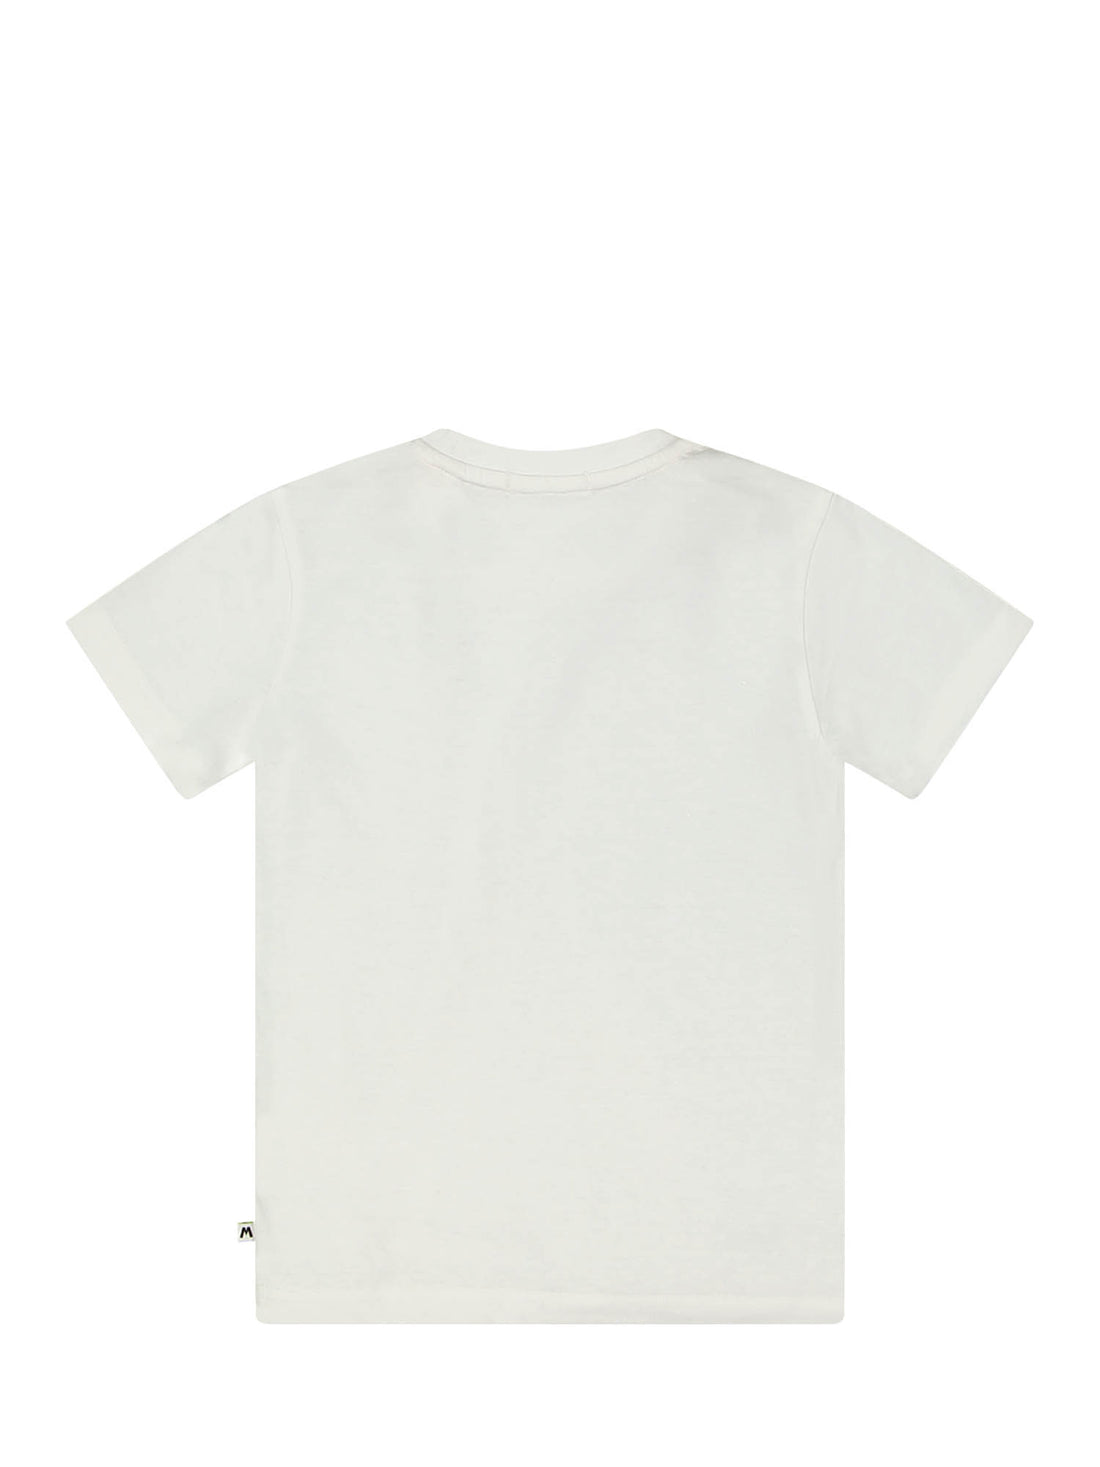 T-shirt Bianco Melby